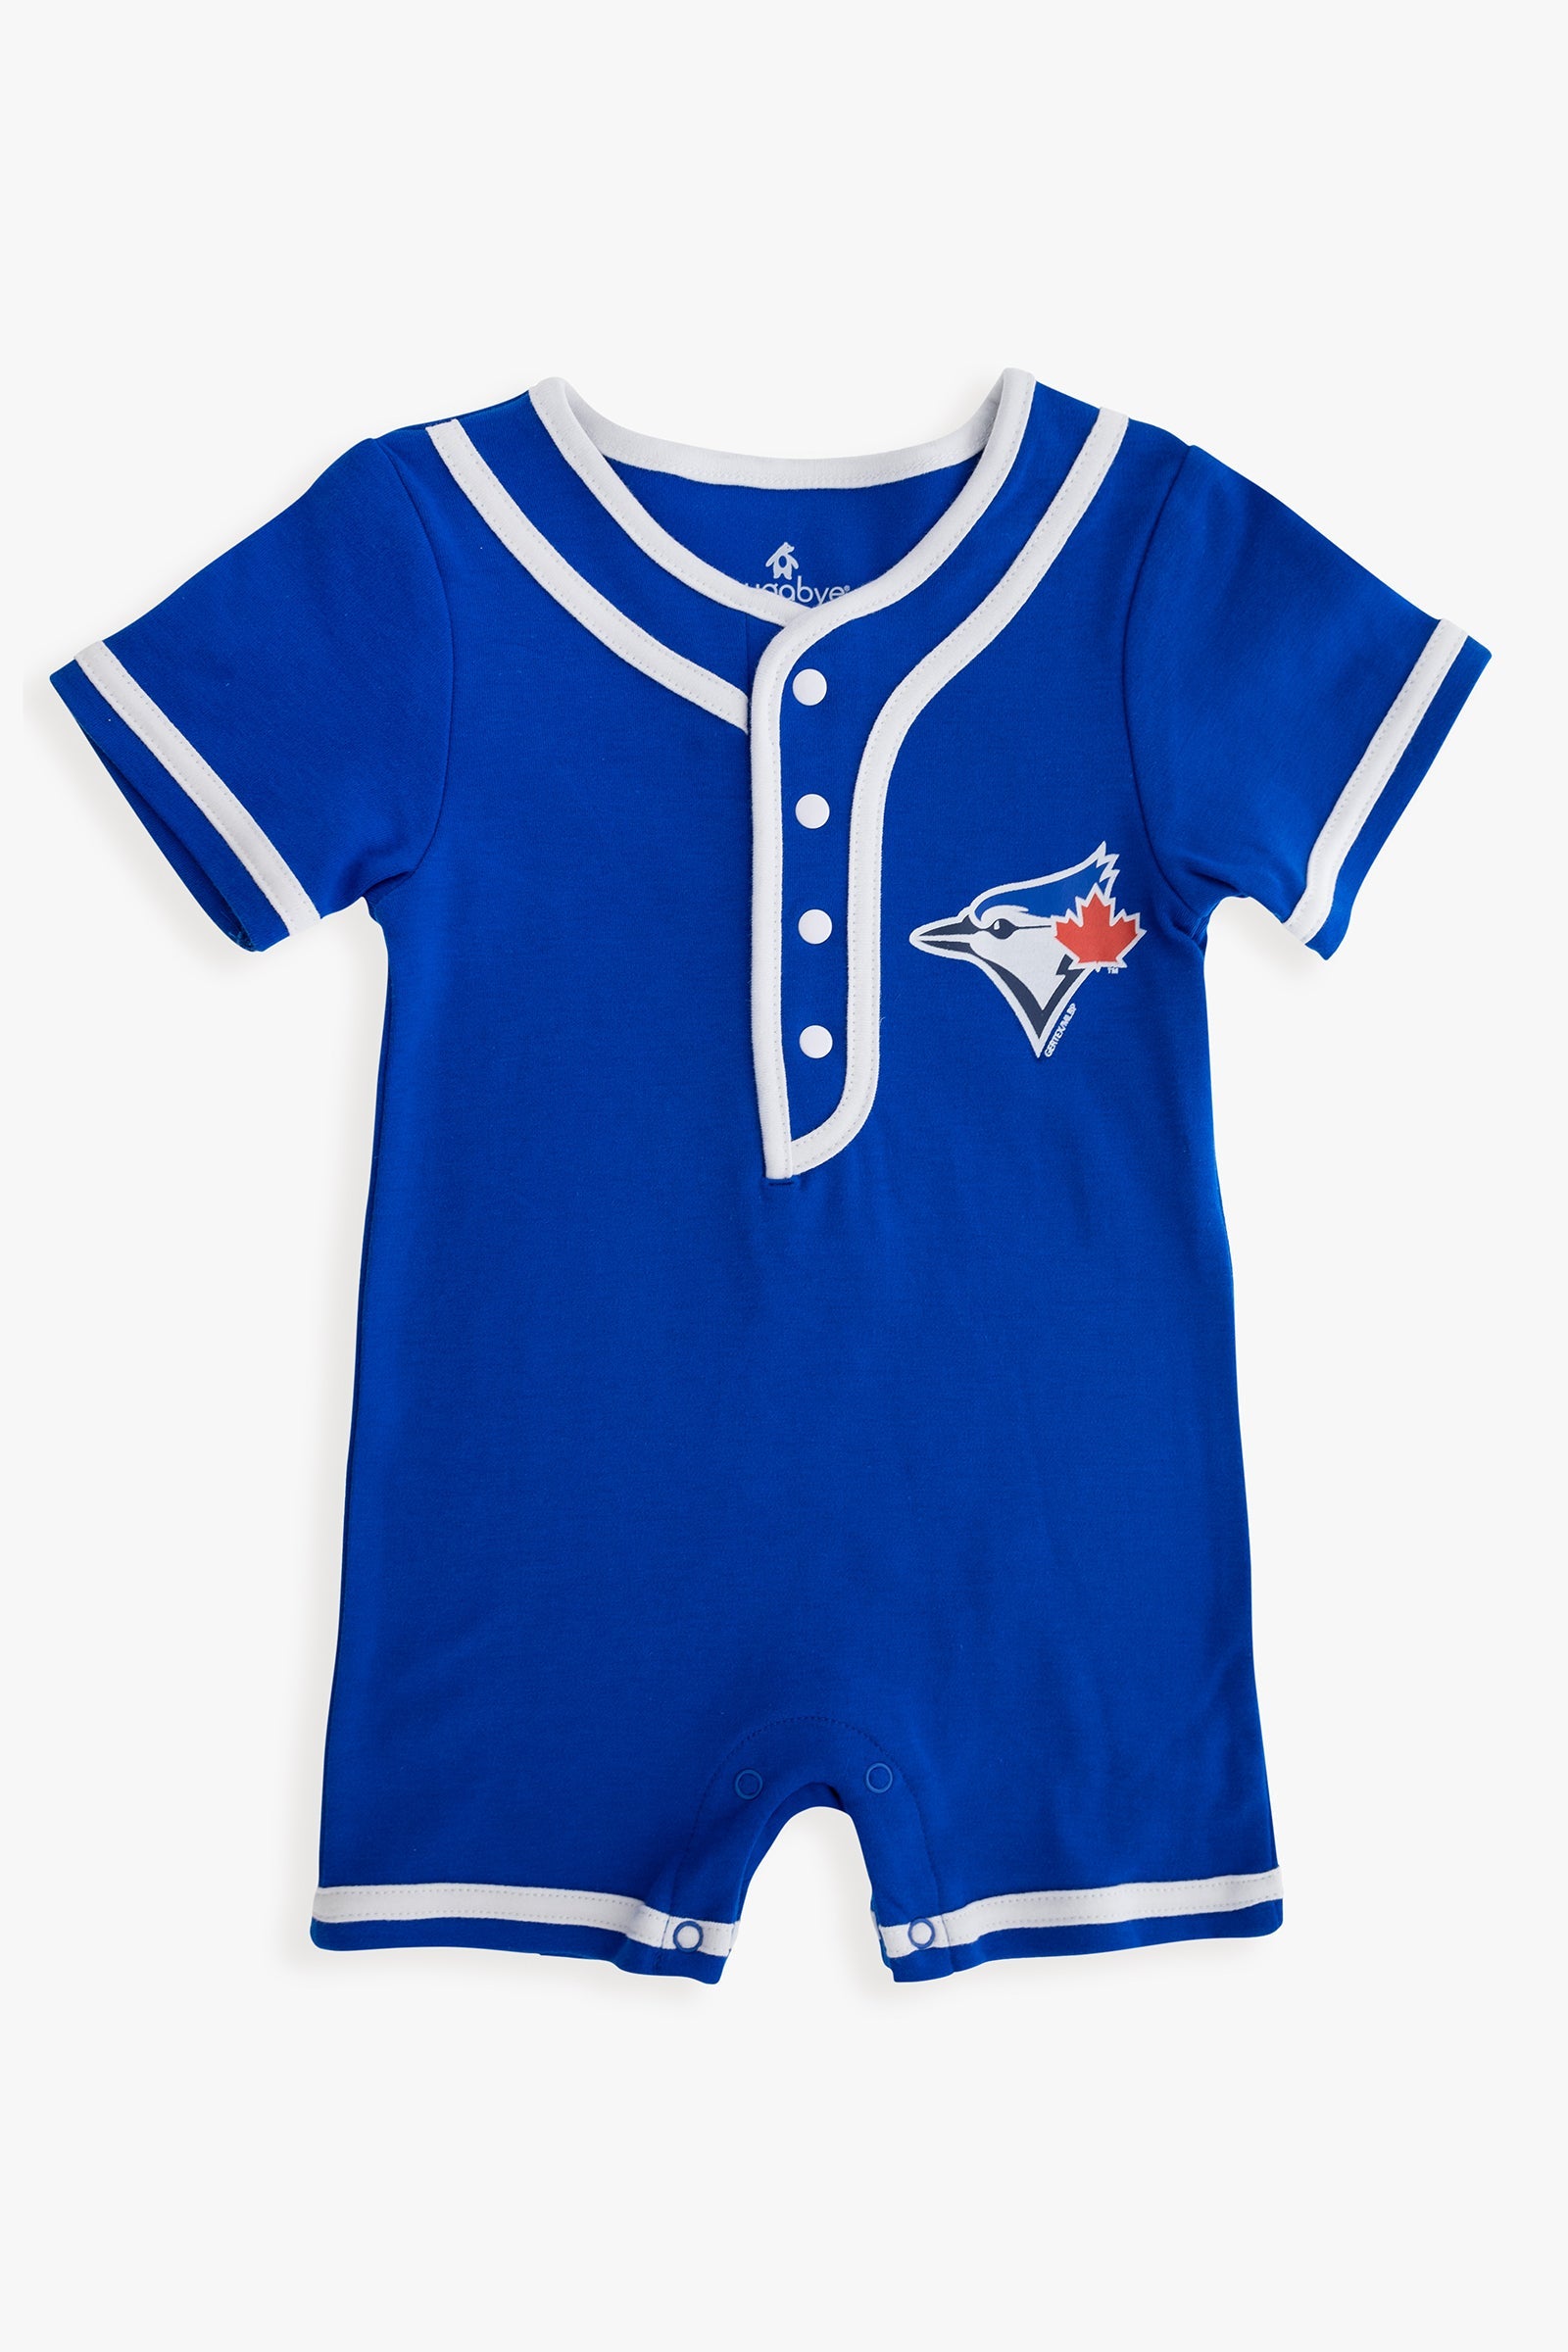 Snugabye Toronto Blue Jays 3 Piece Infant Bodysuit Set 12-18 Months